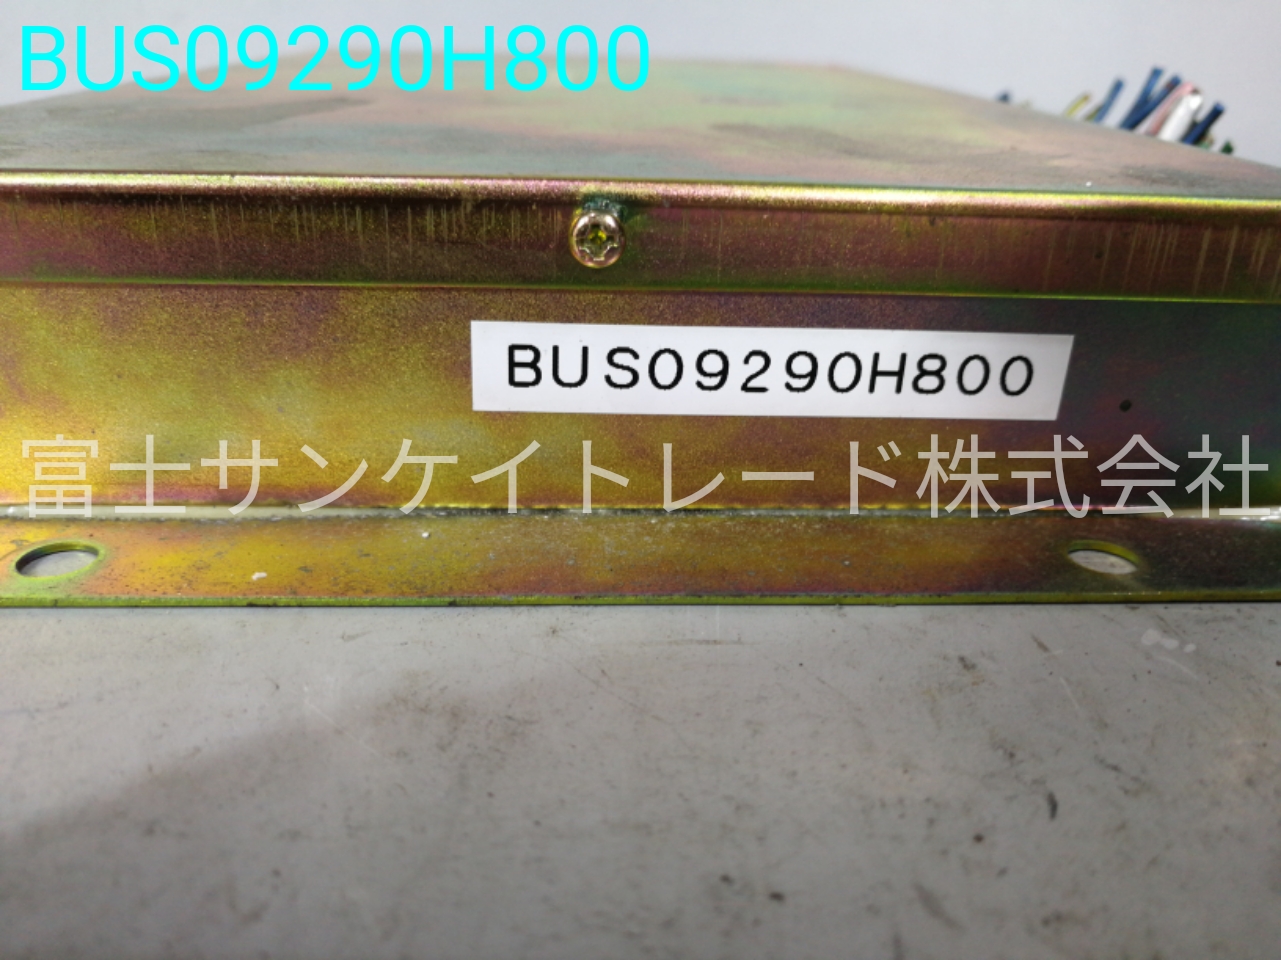 BUS09290H800